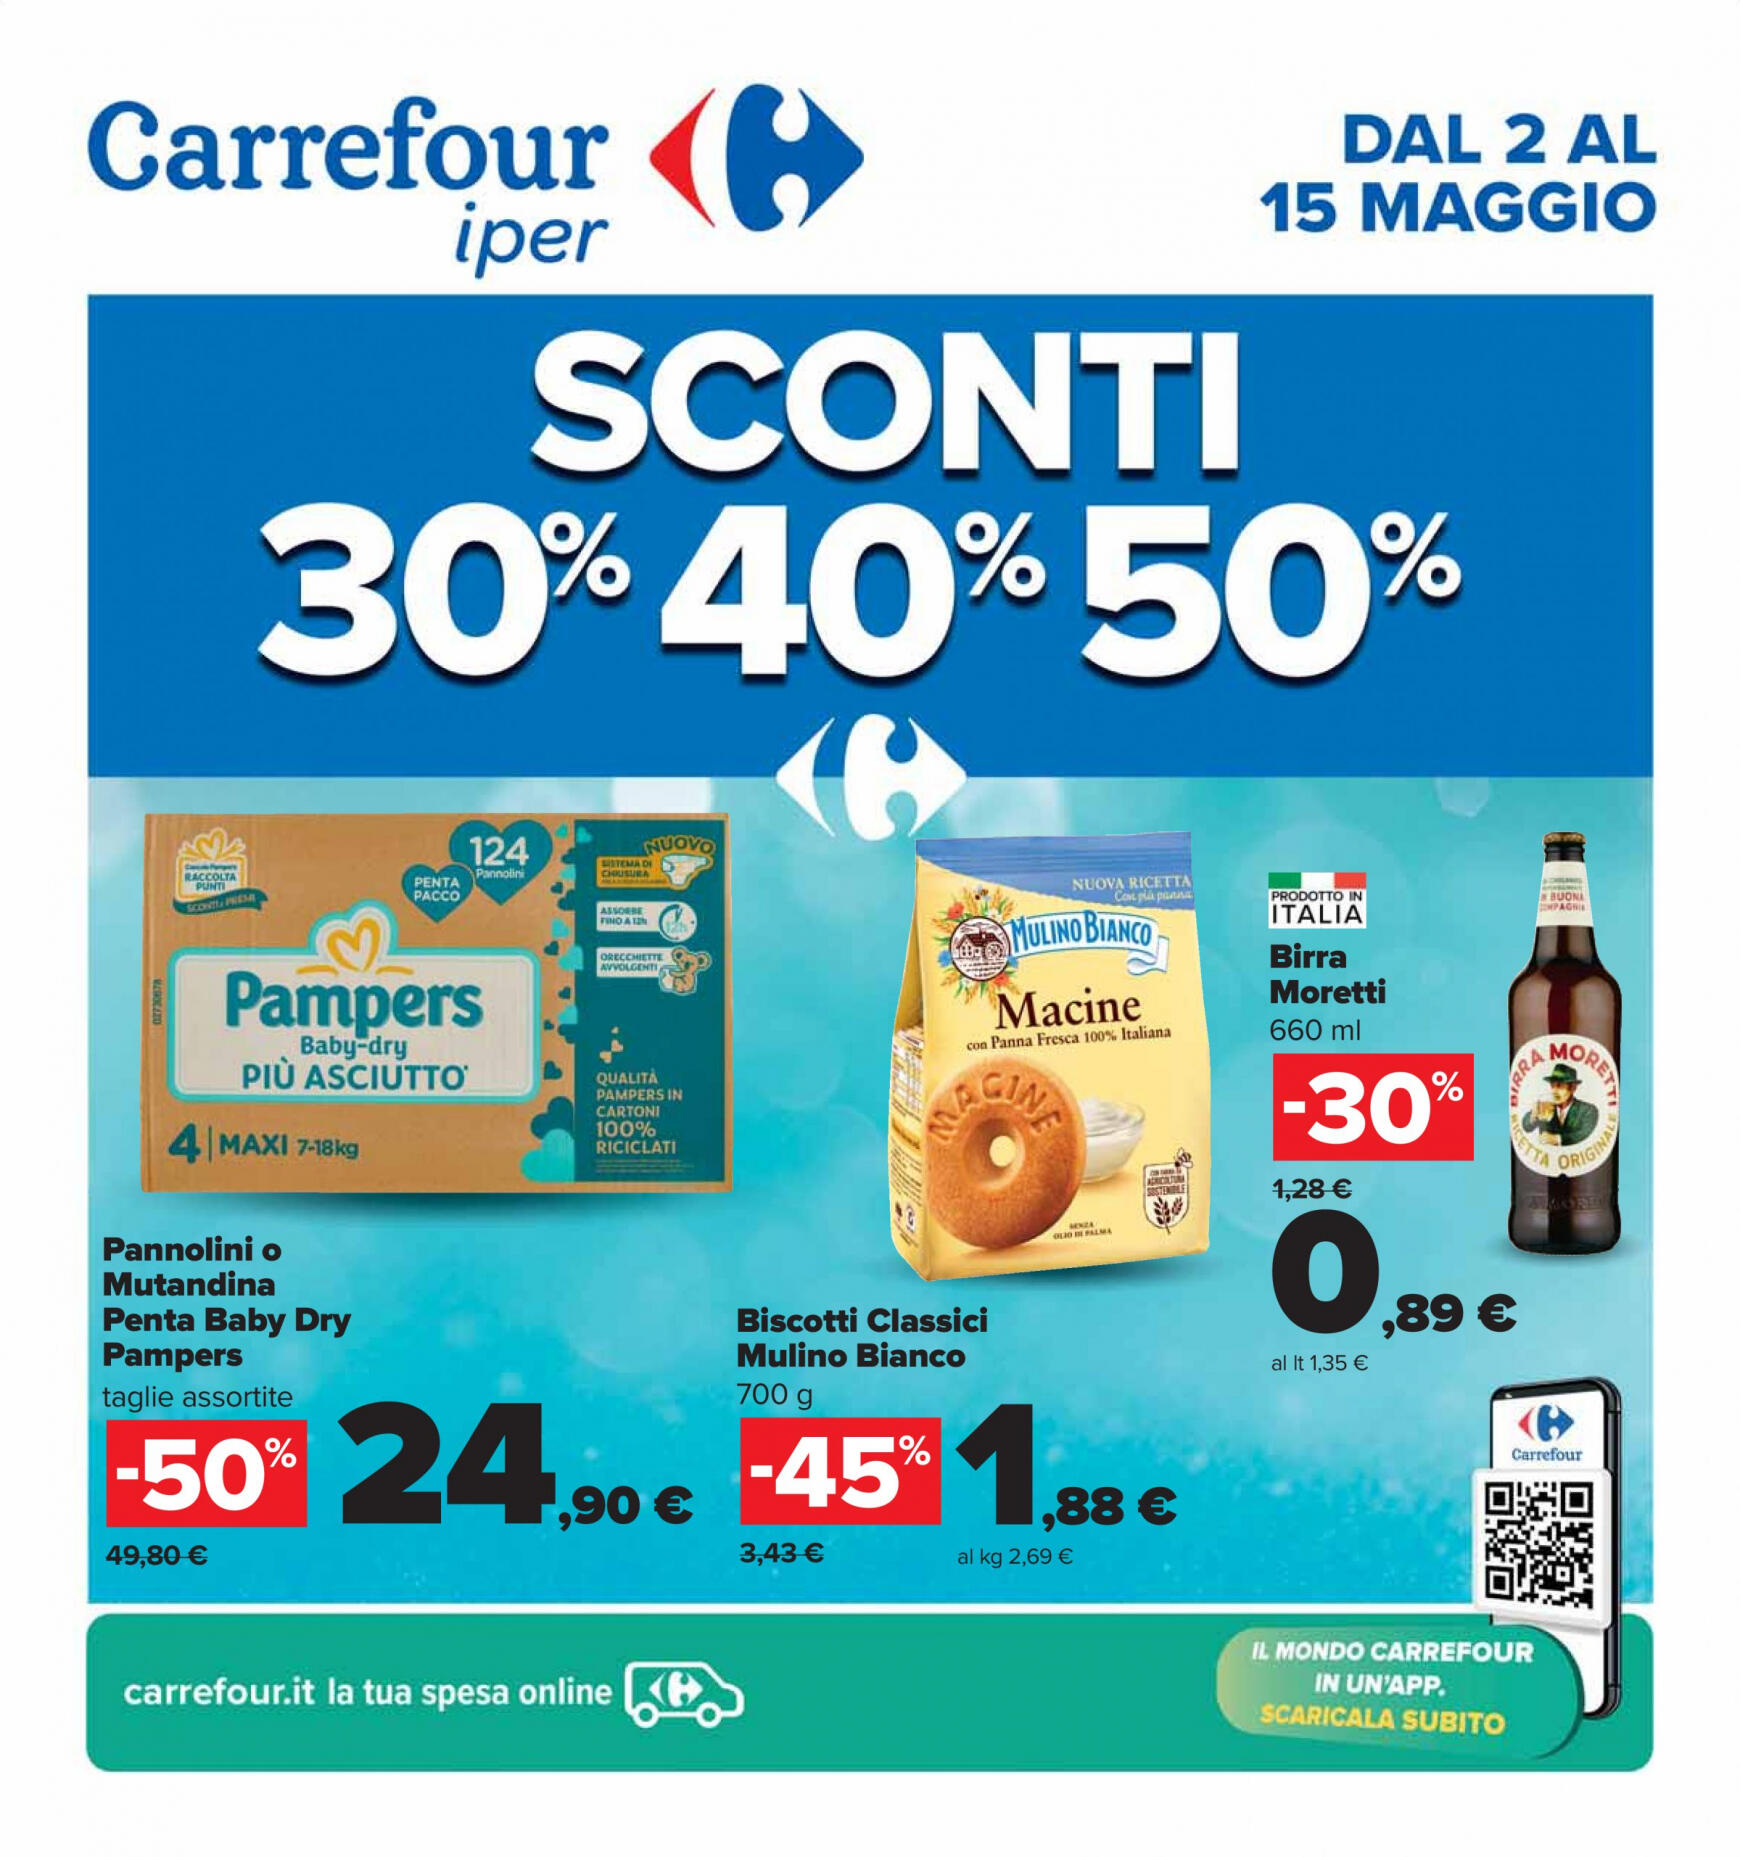 carrefour - Nuovo volantino Carrefour 02.05. - 15.05.